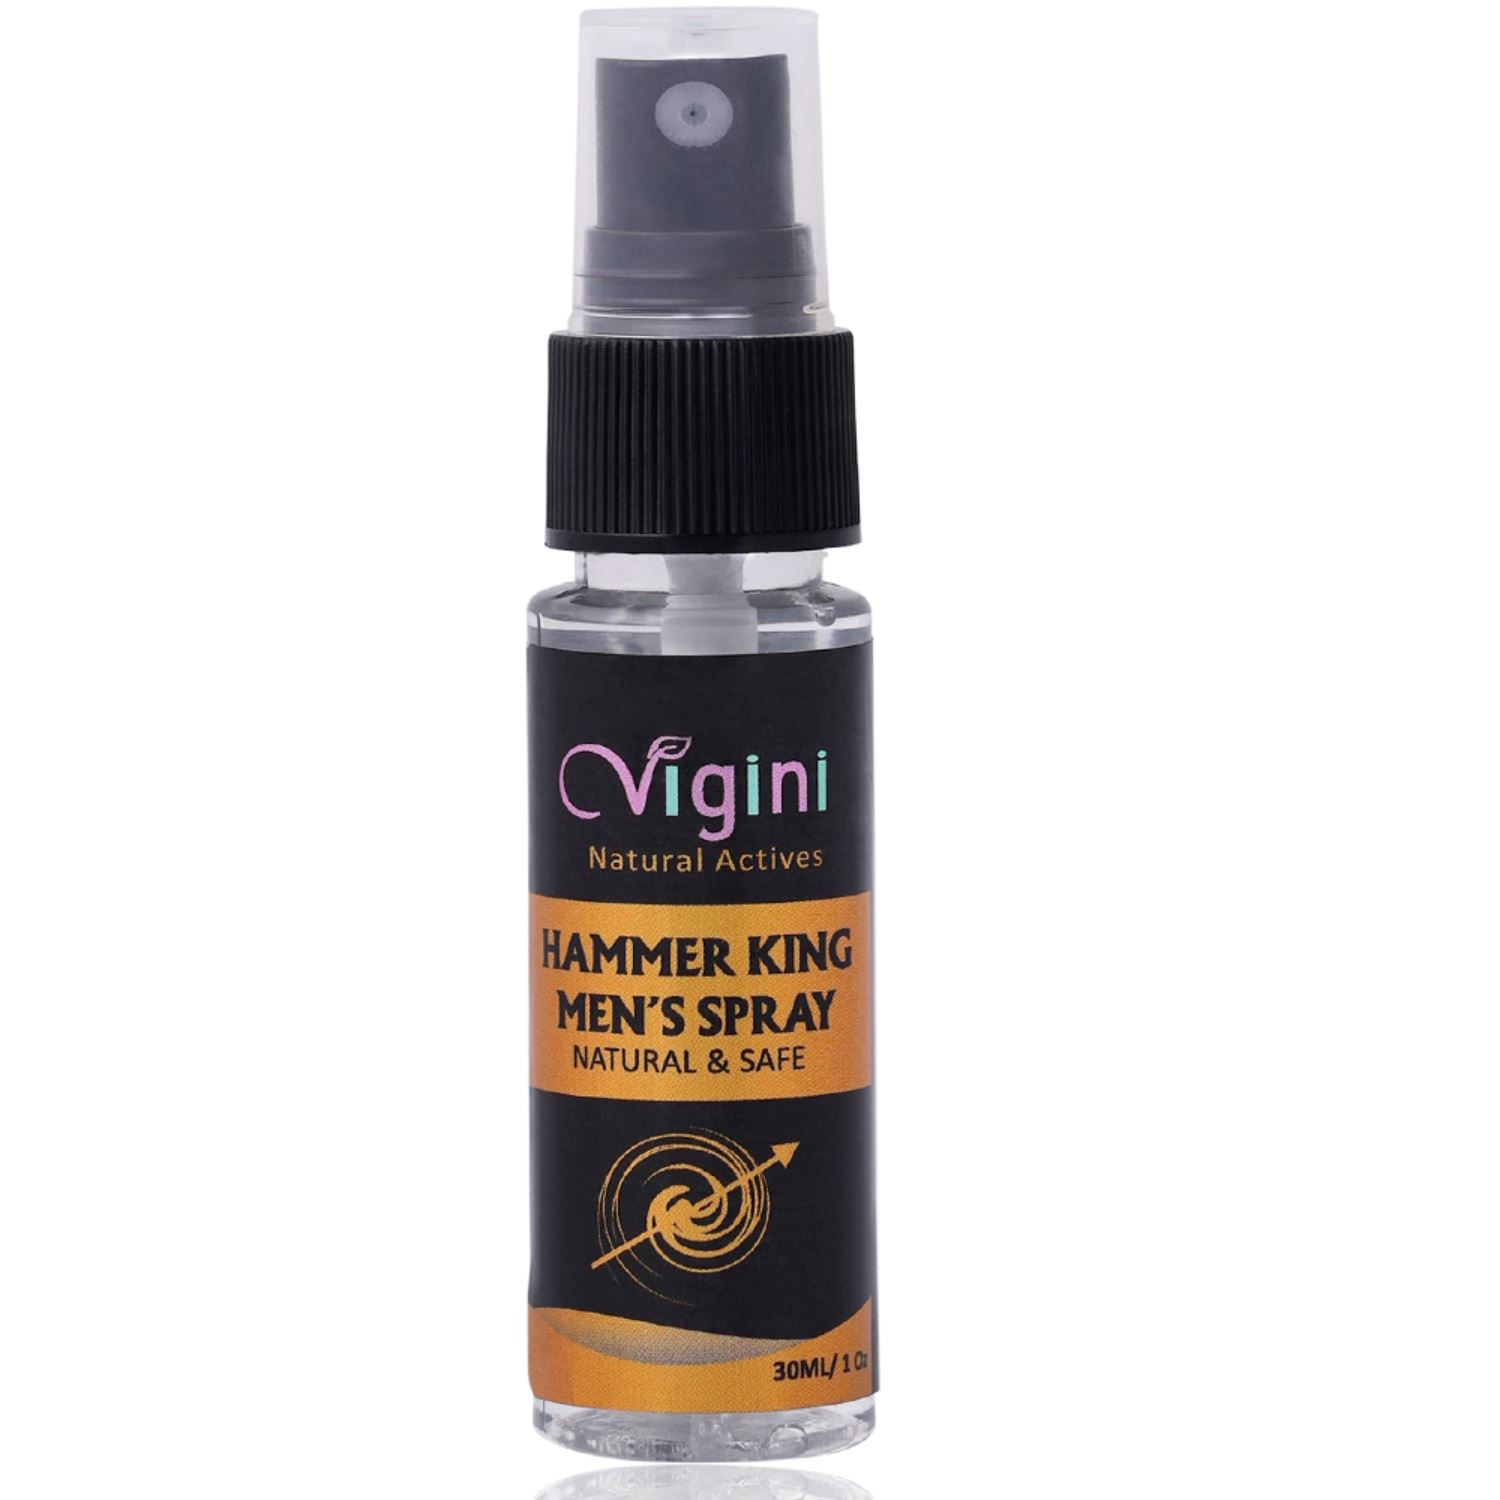 Vigini Natural Hammer King Intimate Deodorant Spray Men Long Lasting Pleasure Water Based Sexual Delay Time CFC Free Non Transferable Male 30 ml